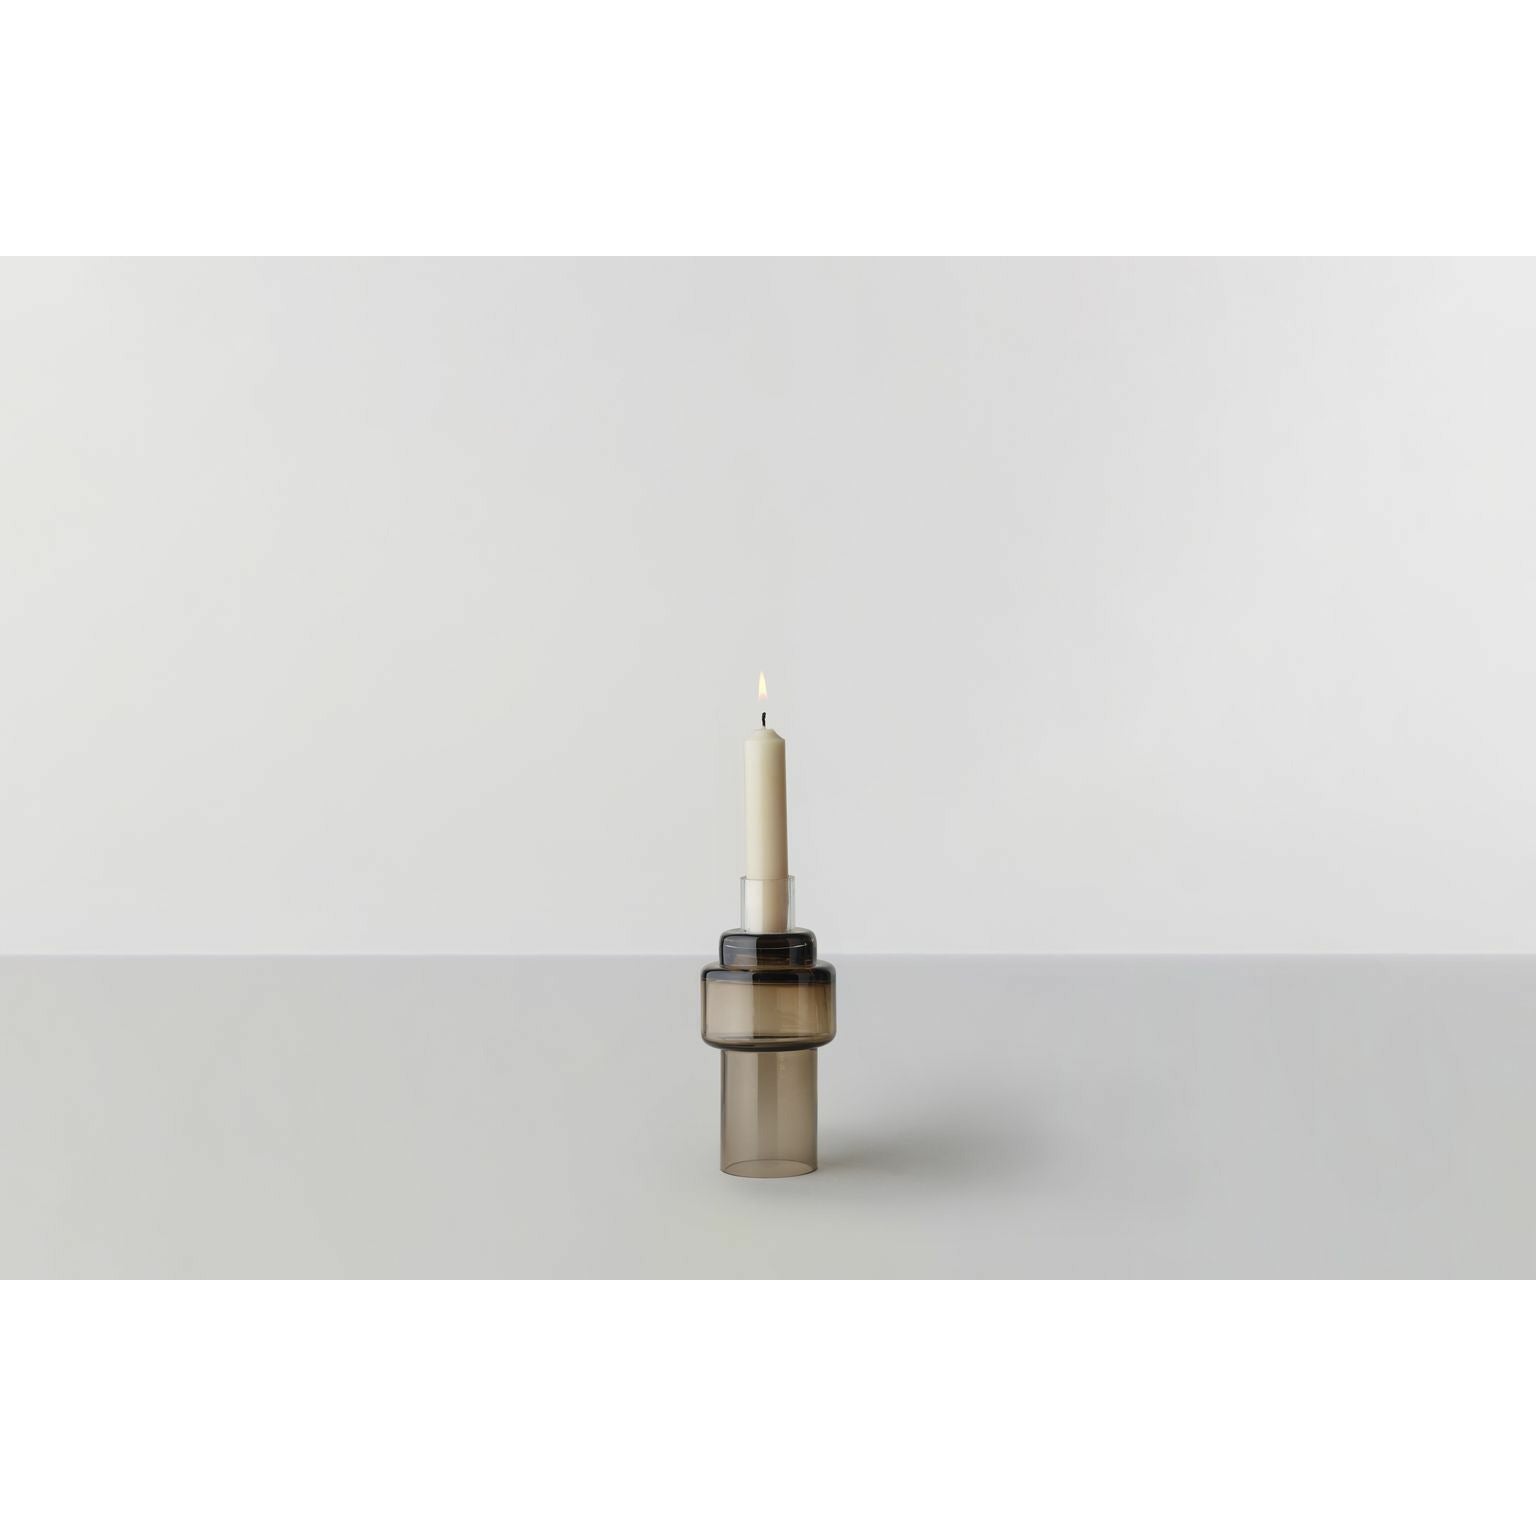 RO -samling nr. 55 Glass Candlestick, Sepia Brown